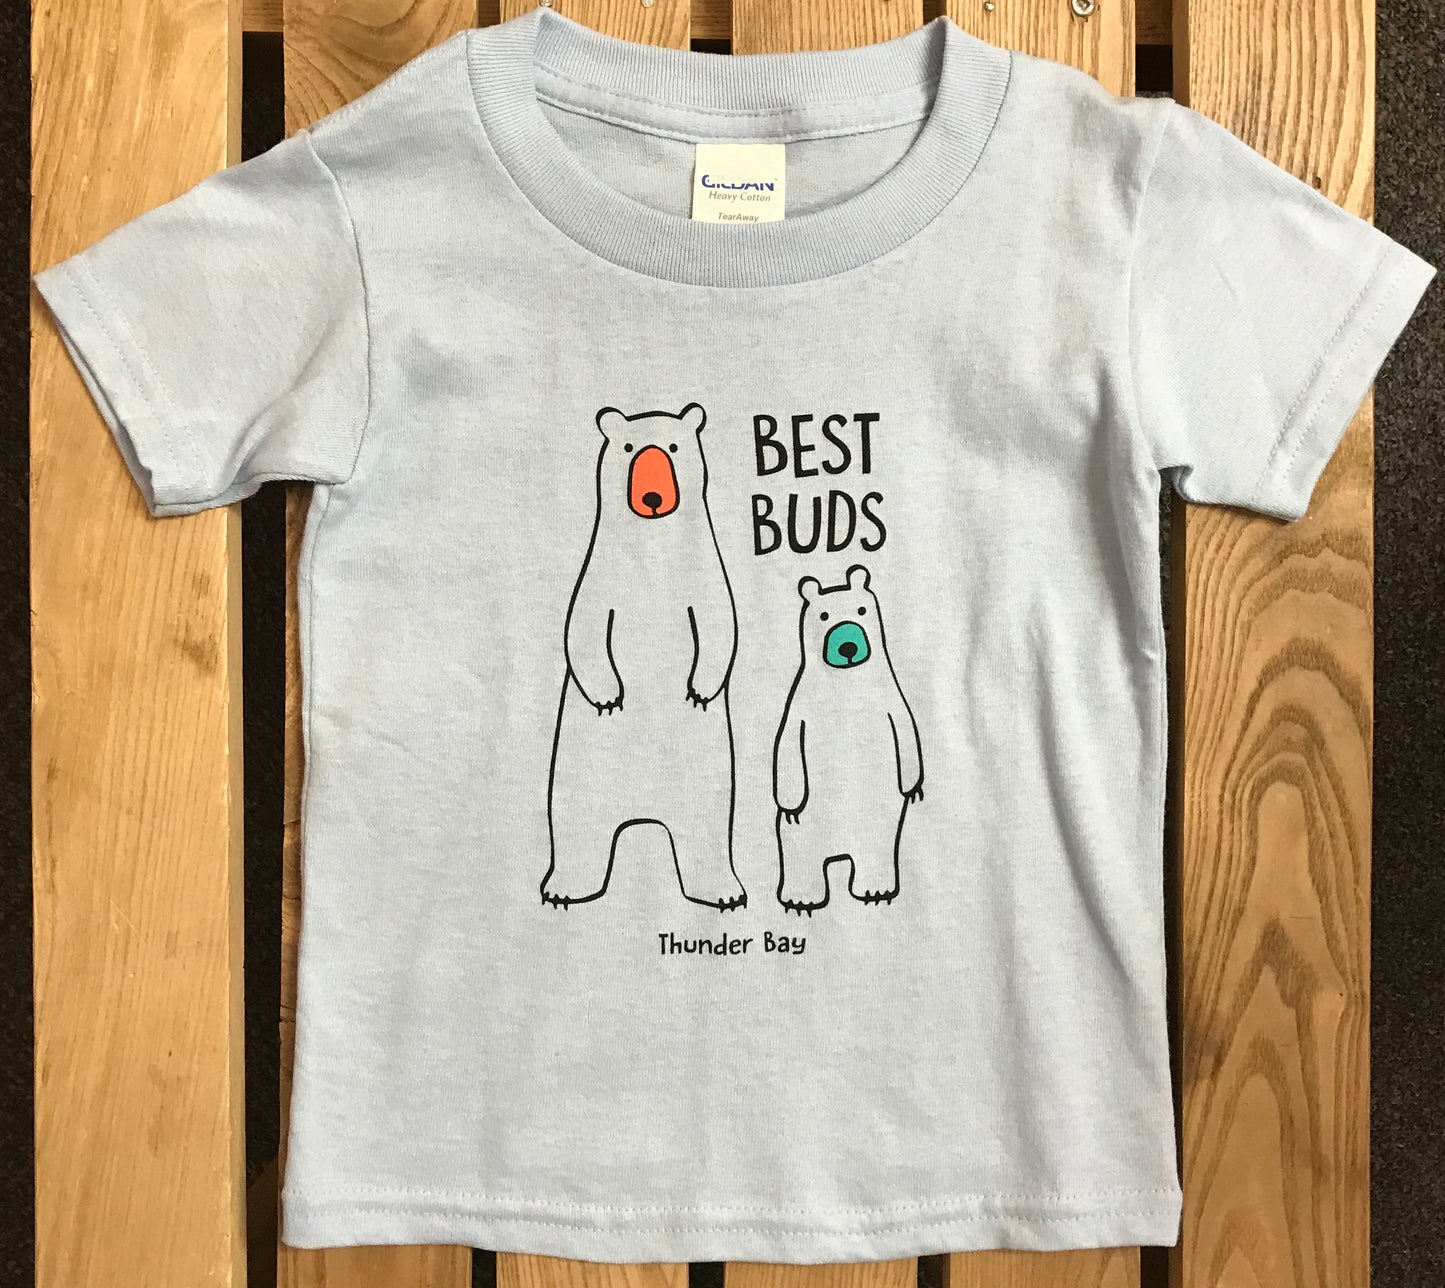 Kid's T-shirt - "Best Buds", Thunder Bay - Baby Blue